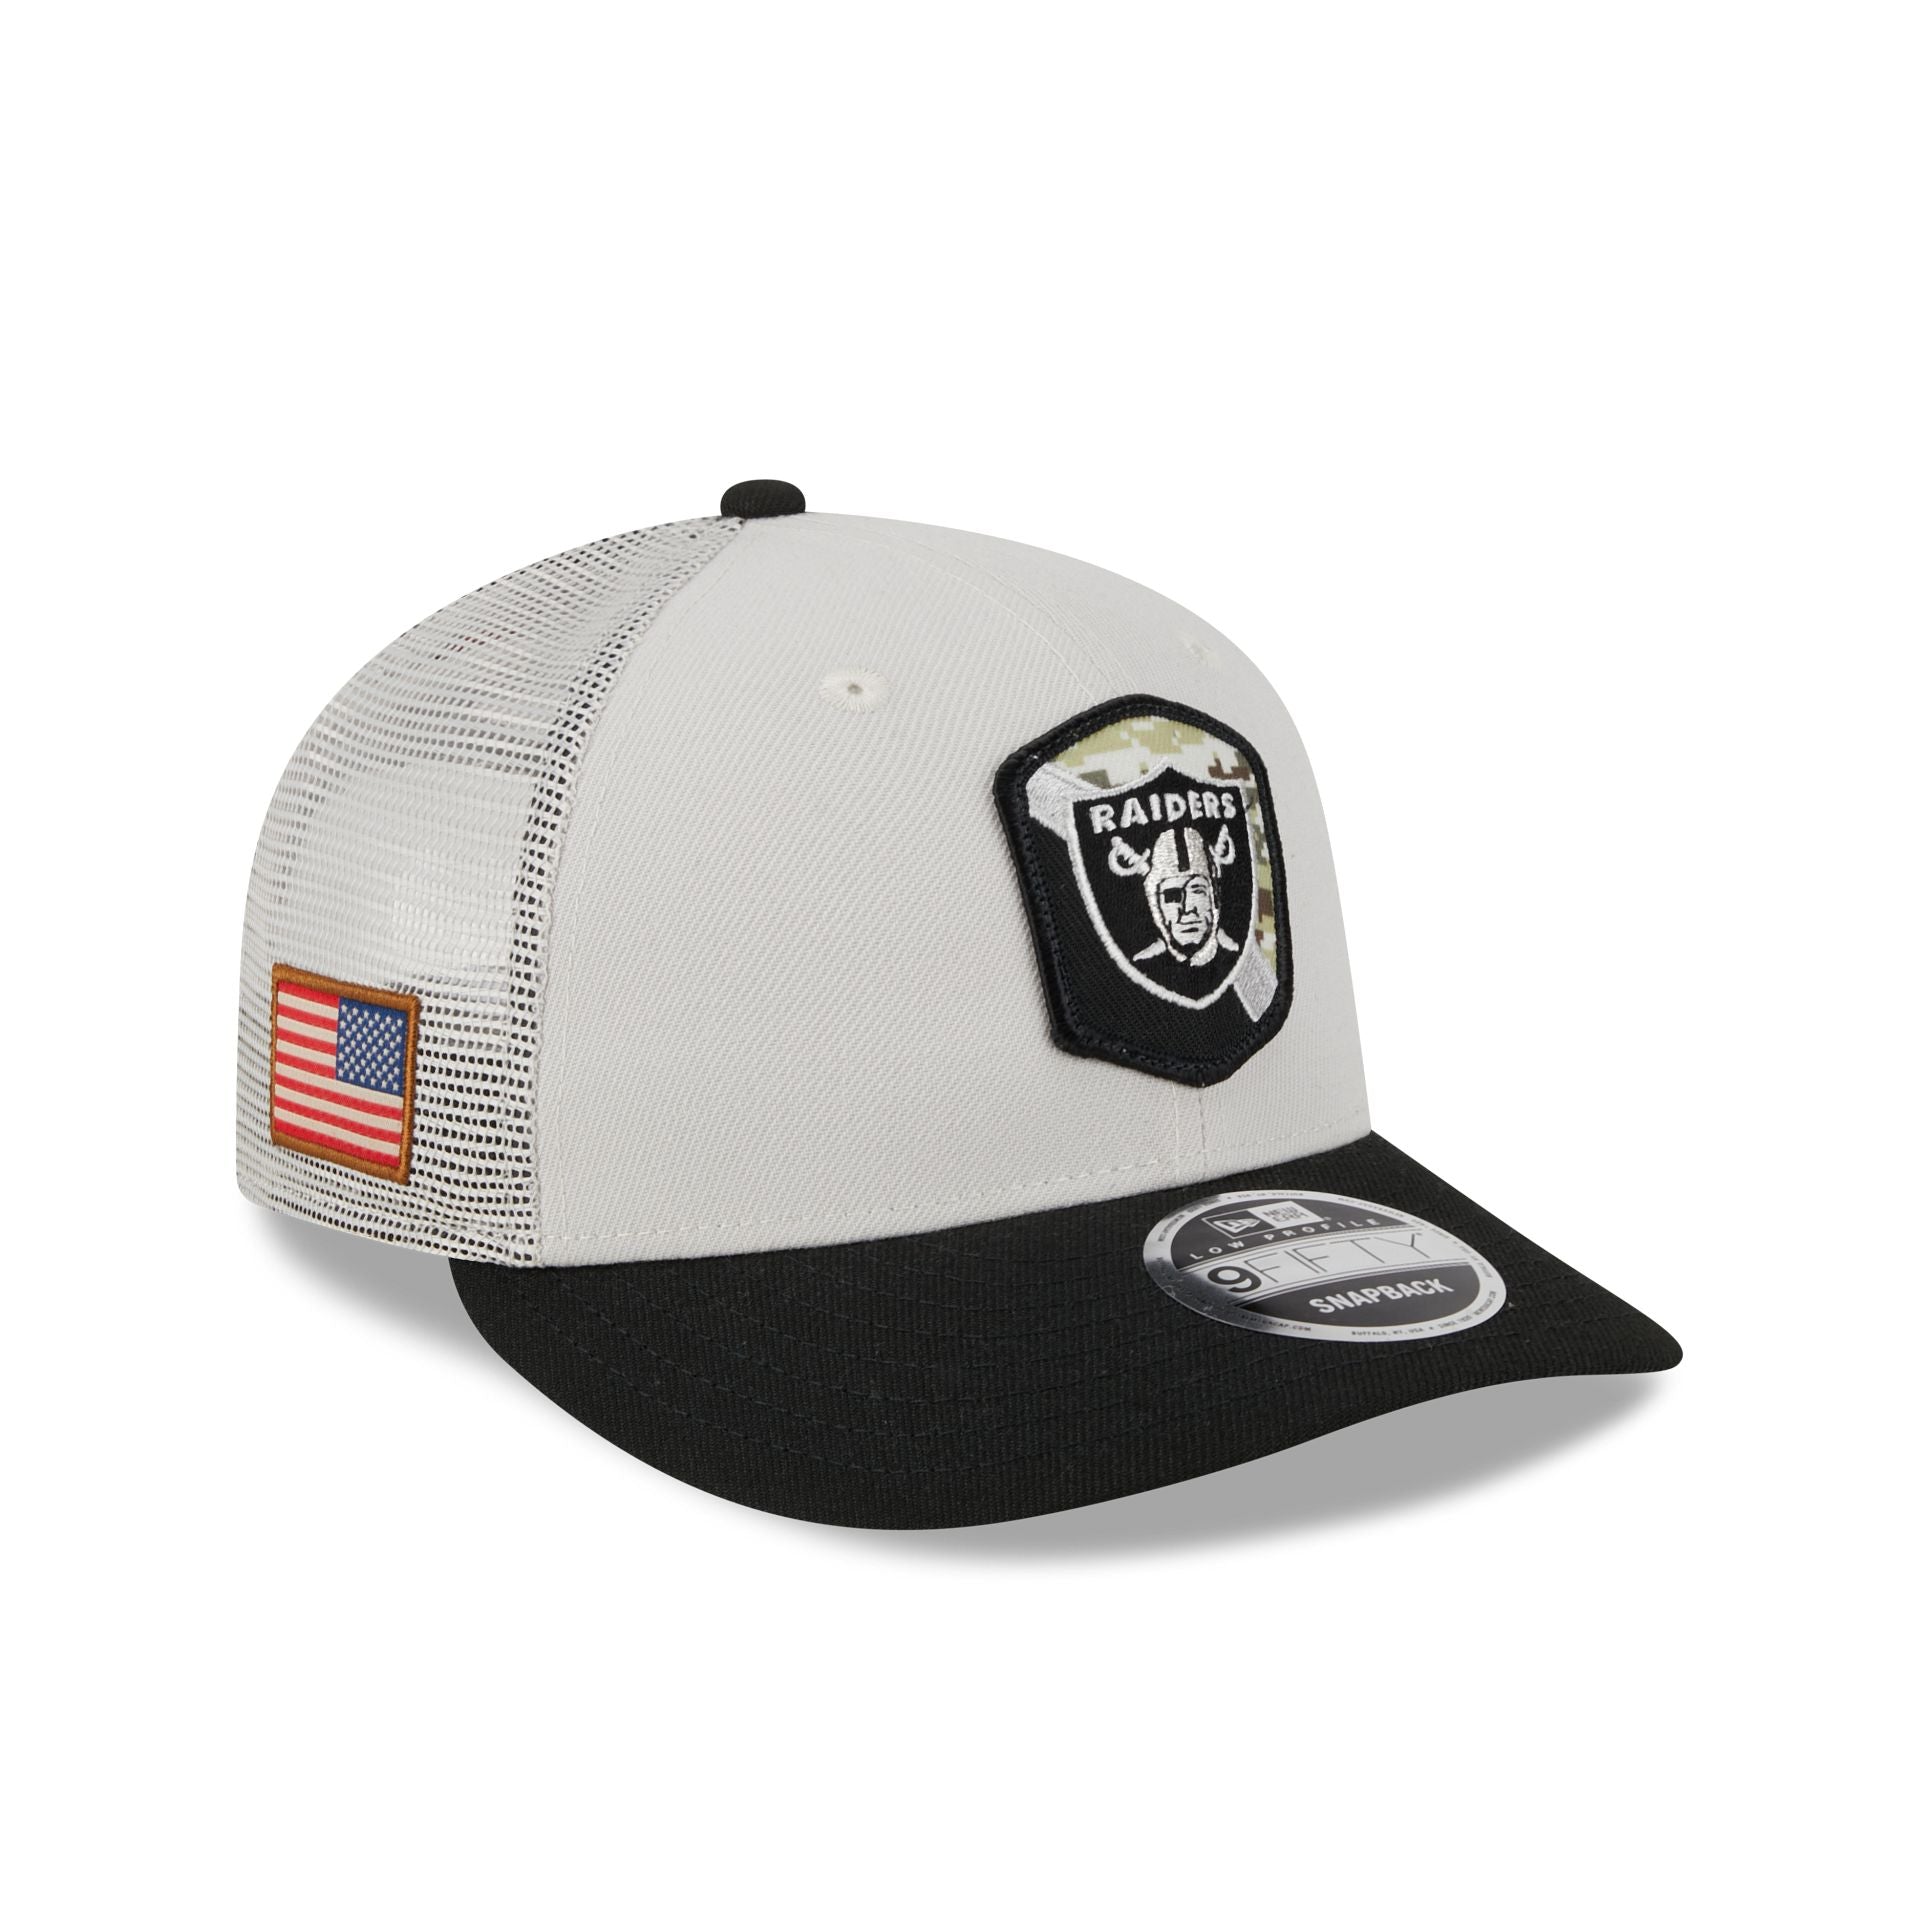 Las Vegas Raiders Satin 9FIFTY Snapback Hat, Black, NFL by New Era